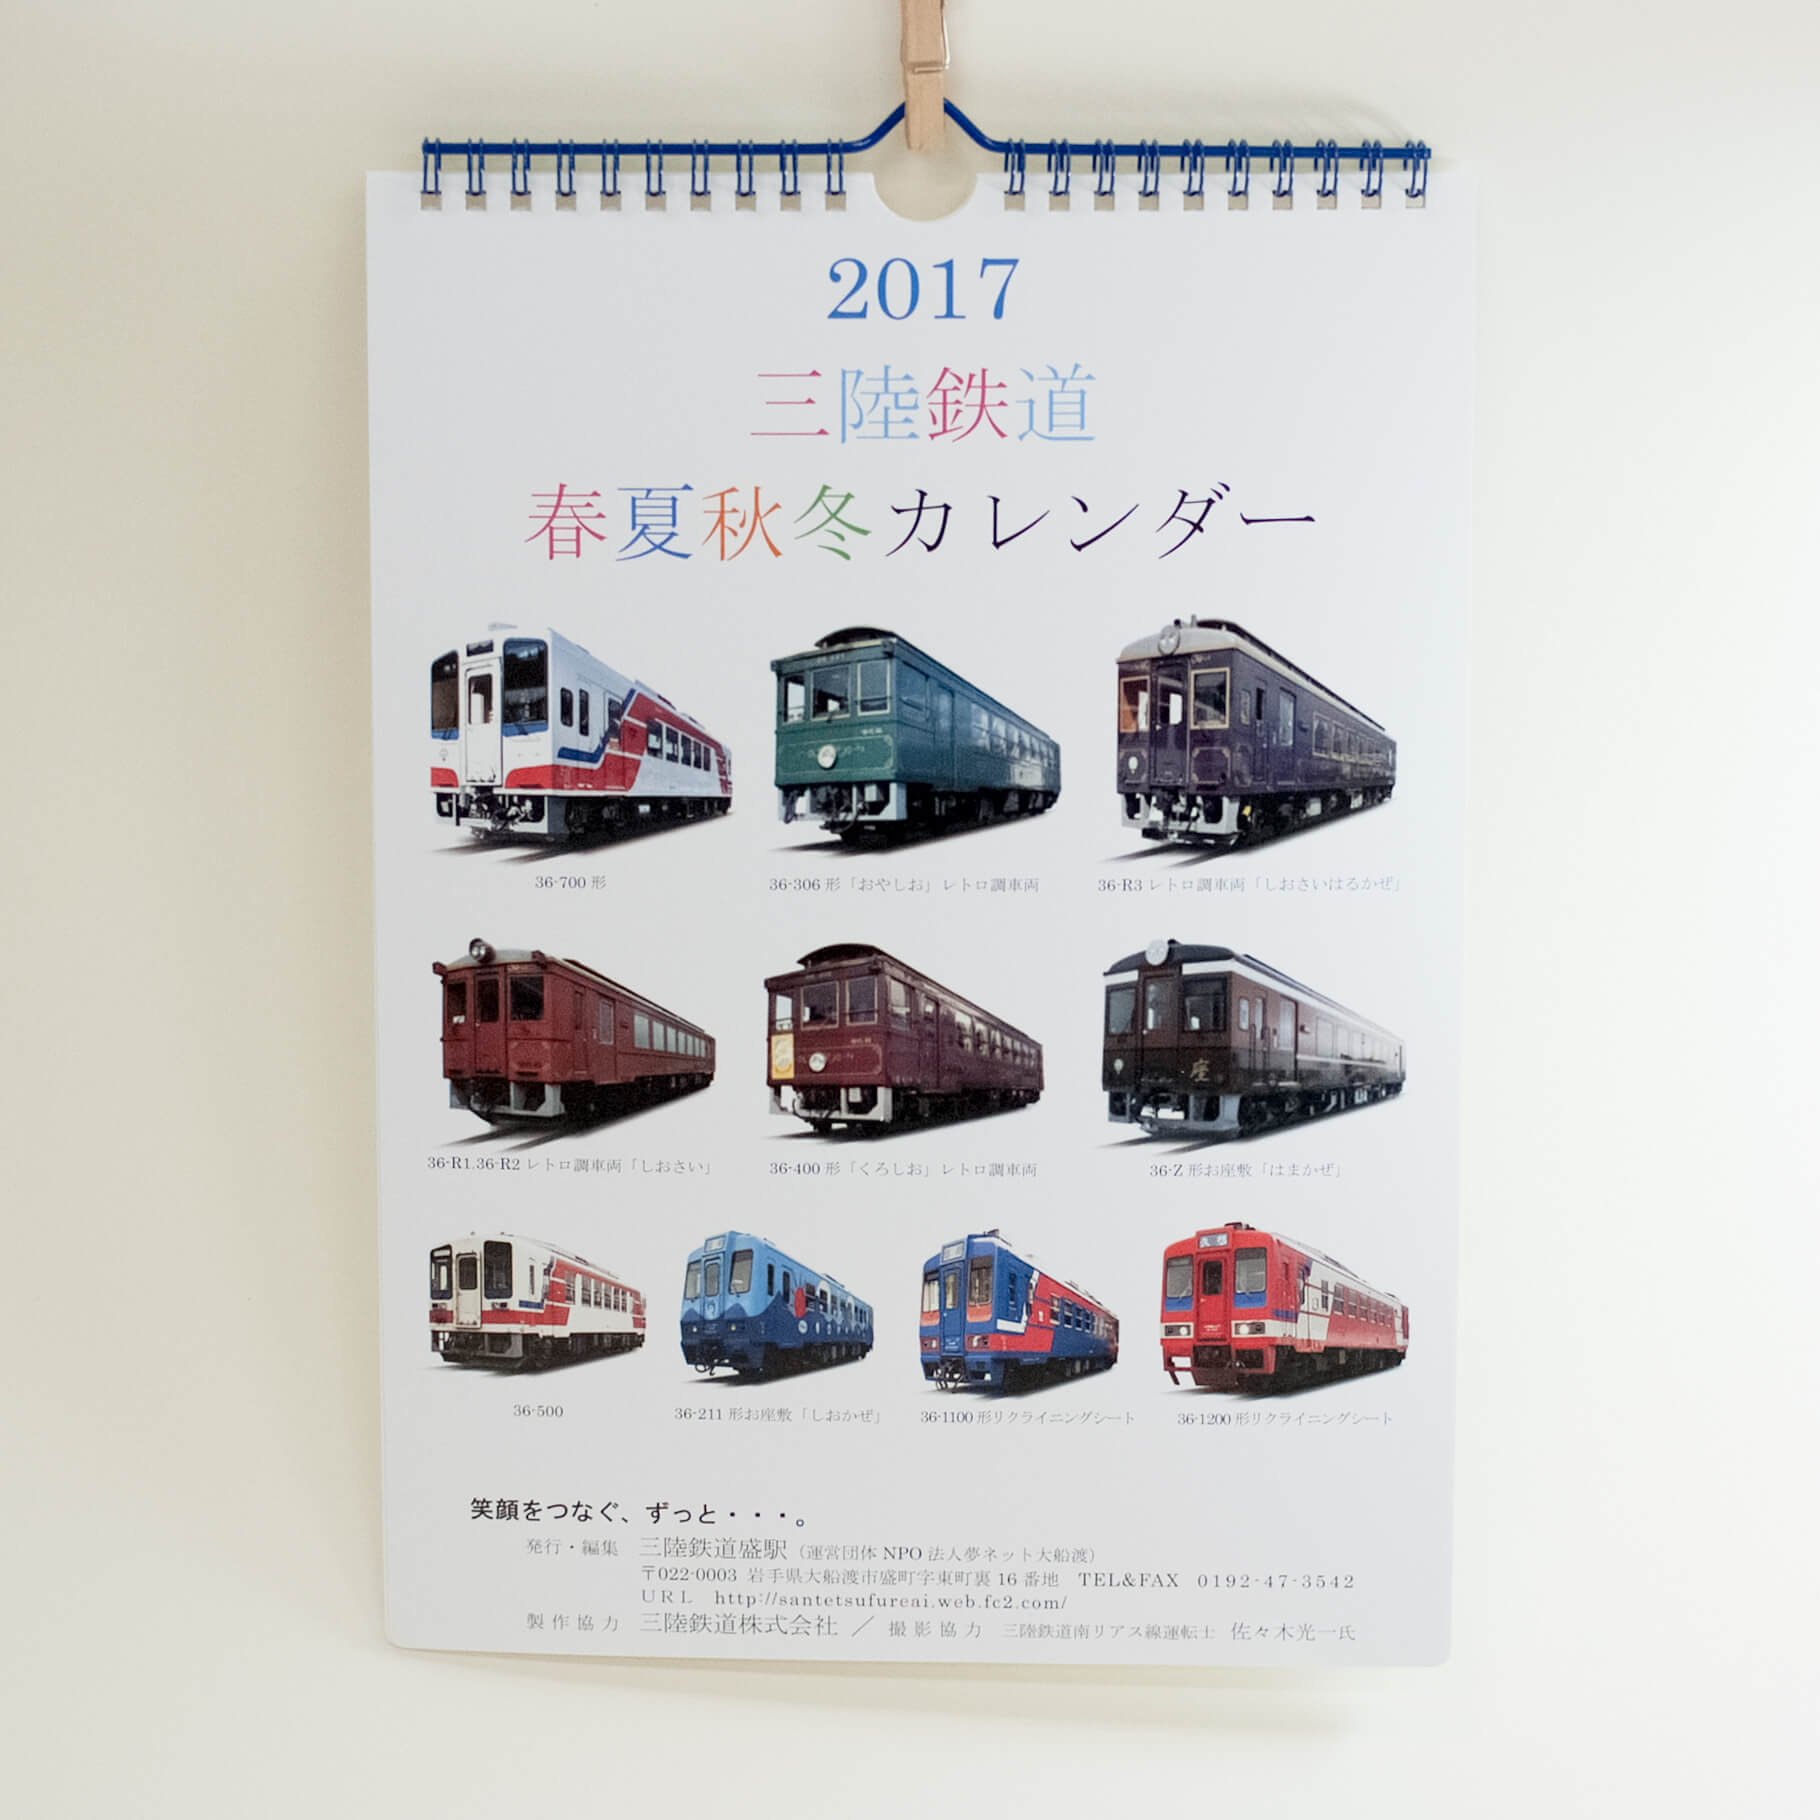 「npo法人夢ネット大船渡 様」製作のオリジナルカレンダー